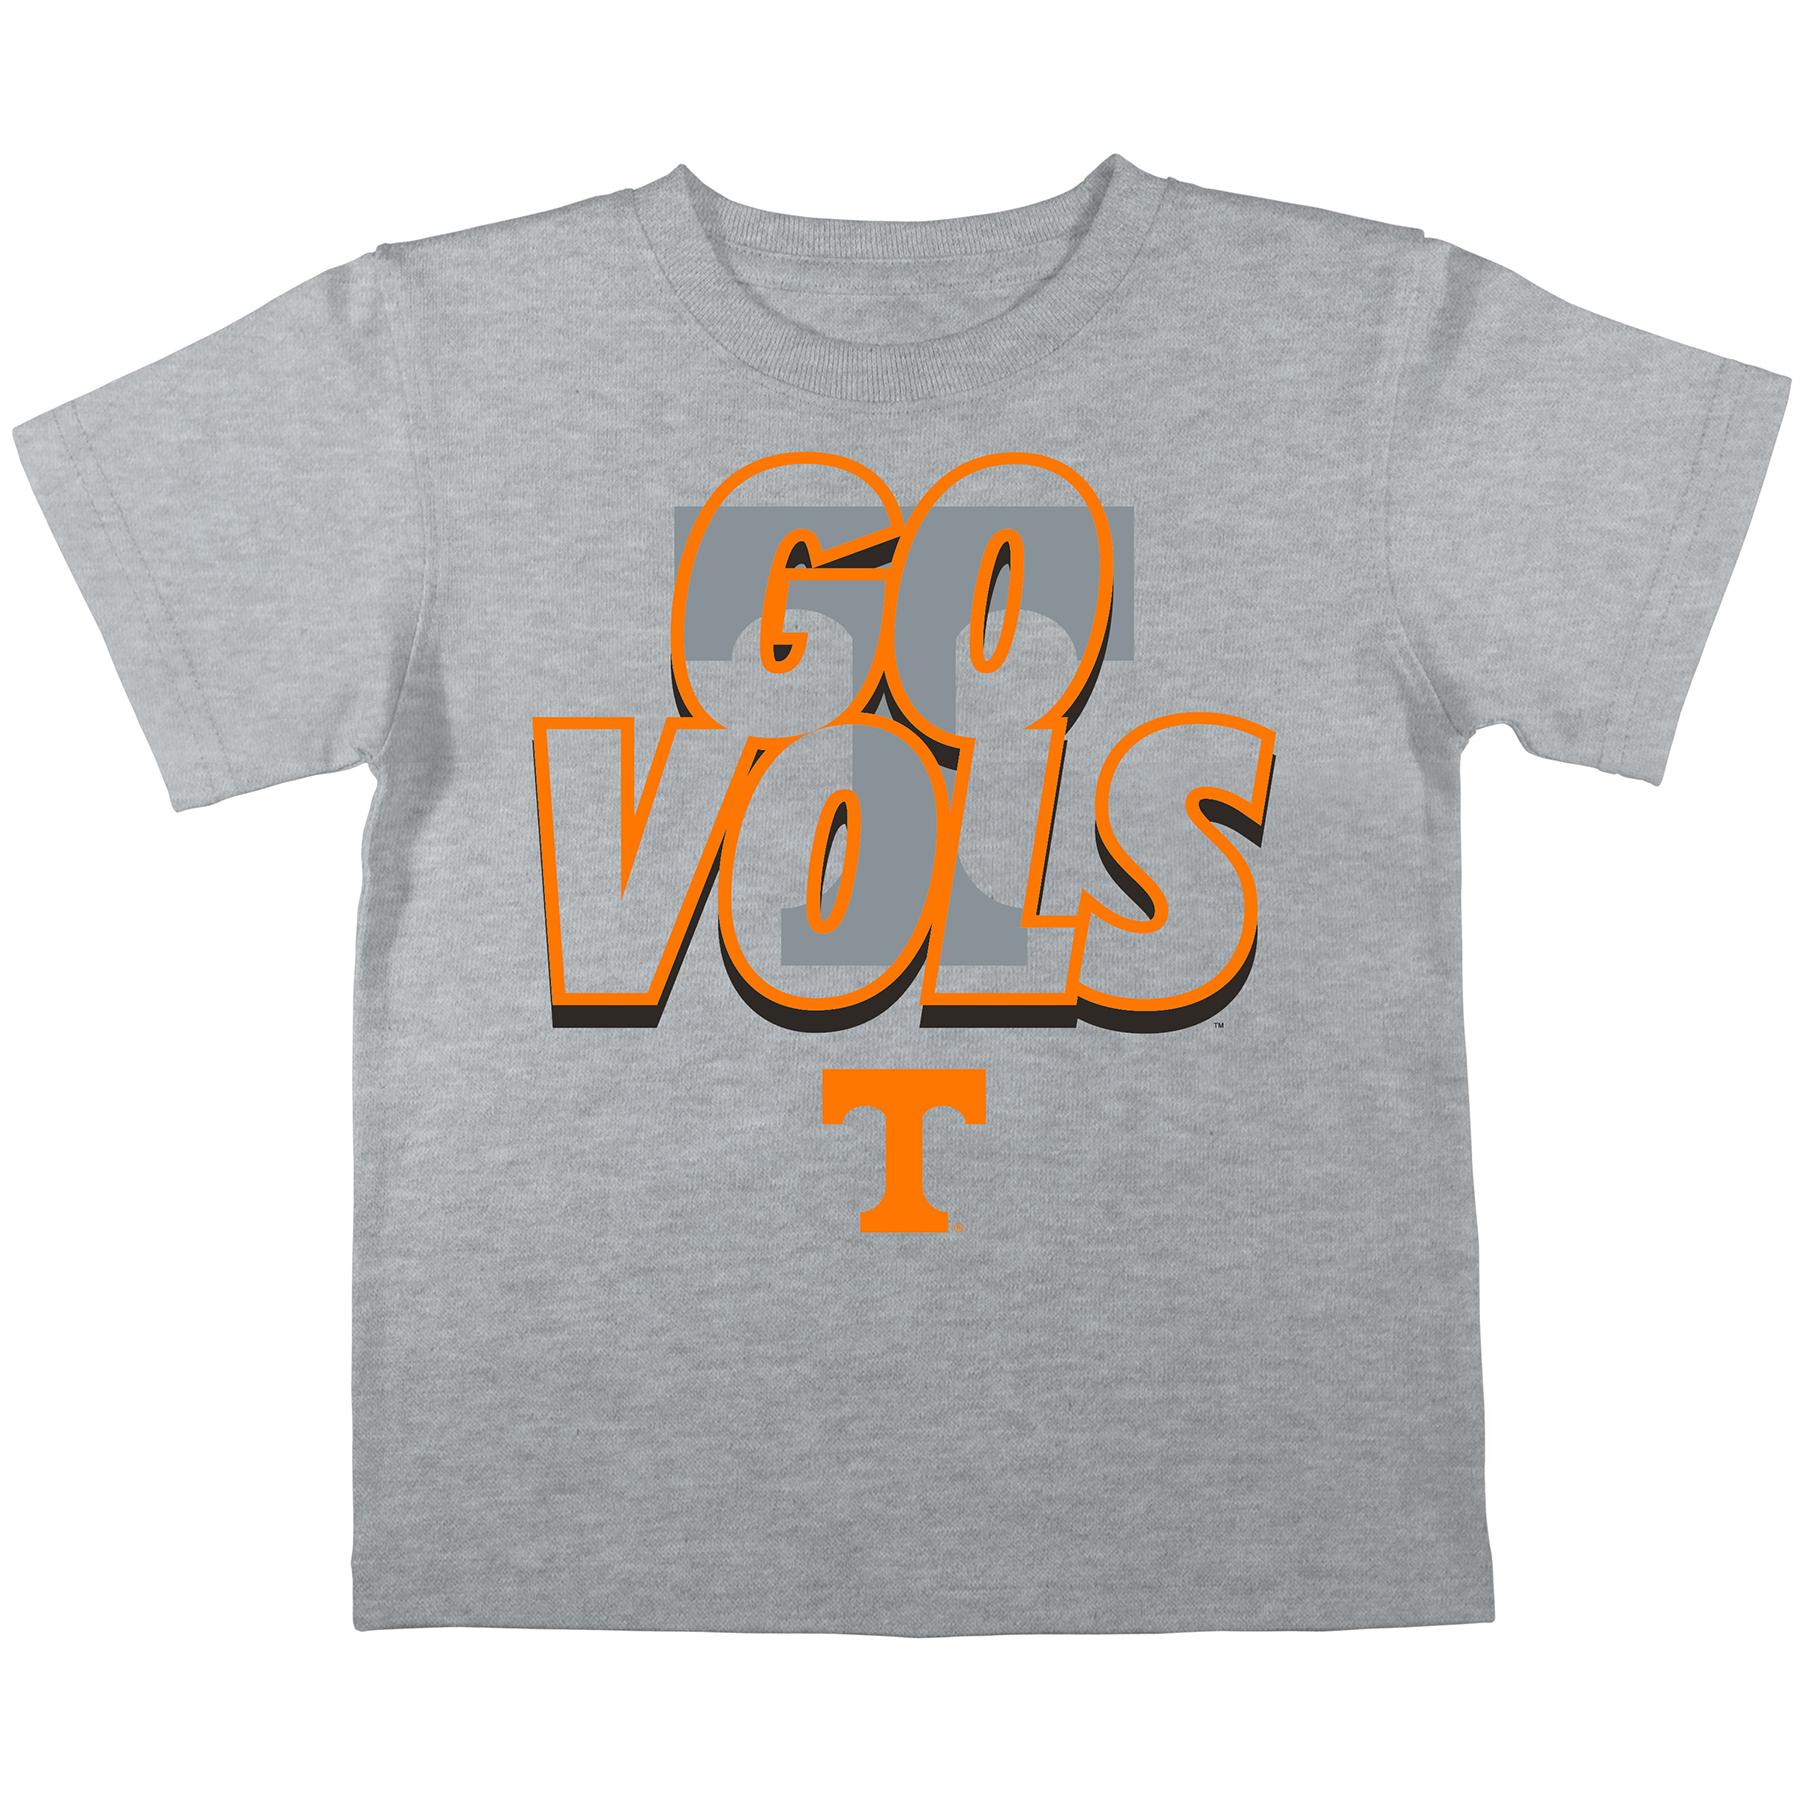 NCAA Boy's Graphic T-Shirt - University of Tennessee Volunteers